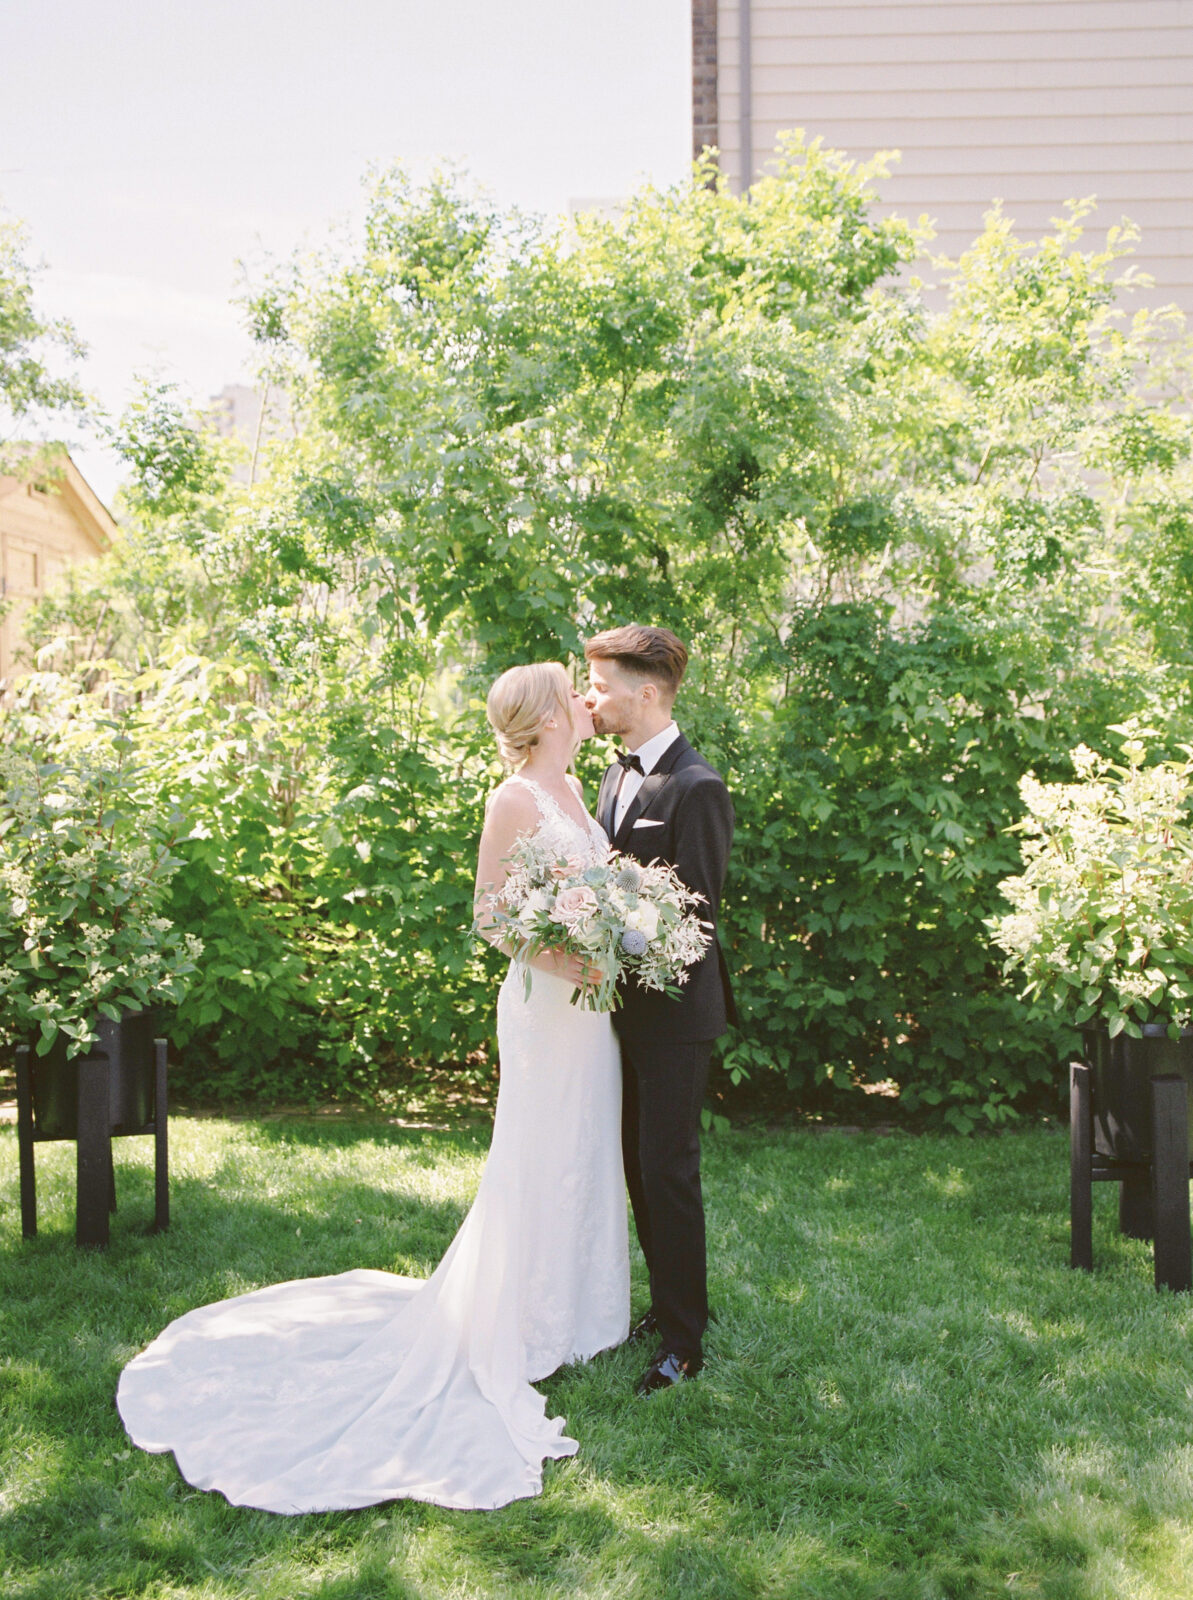 Backyard Wedding in Edmonton Alberta - featured on the Bronte Bride Blog